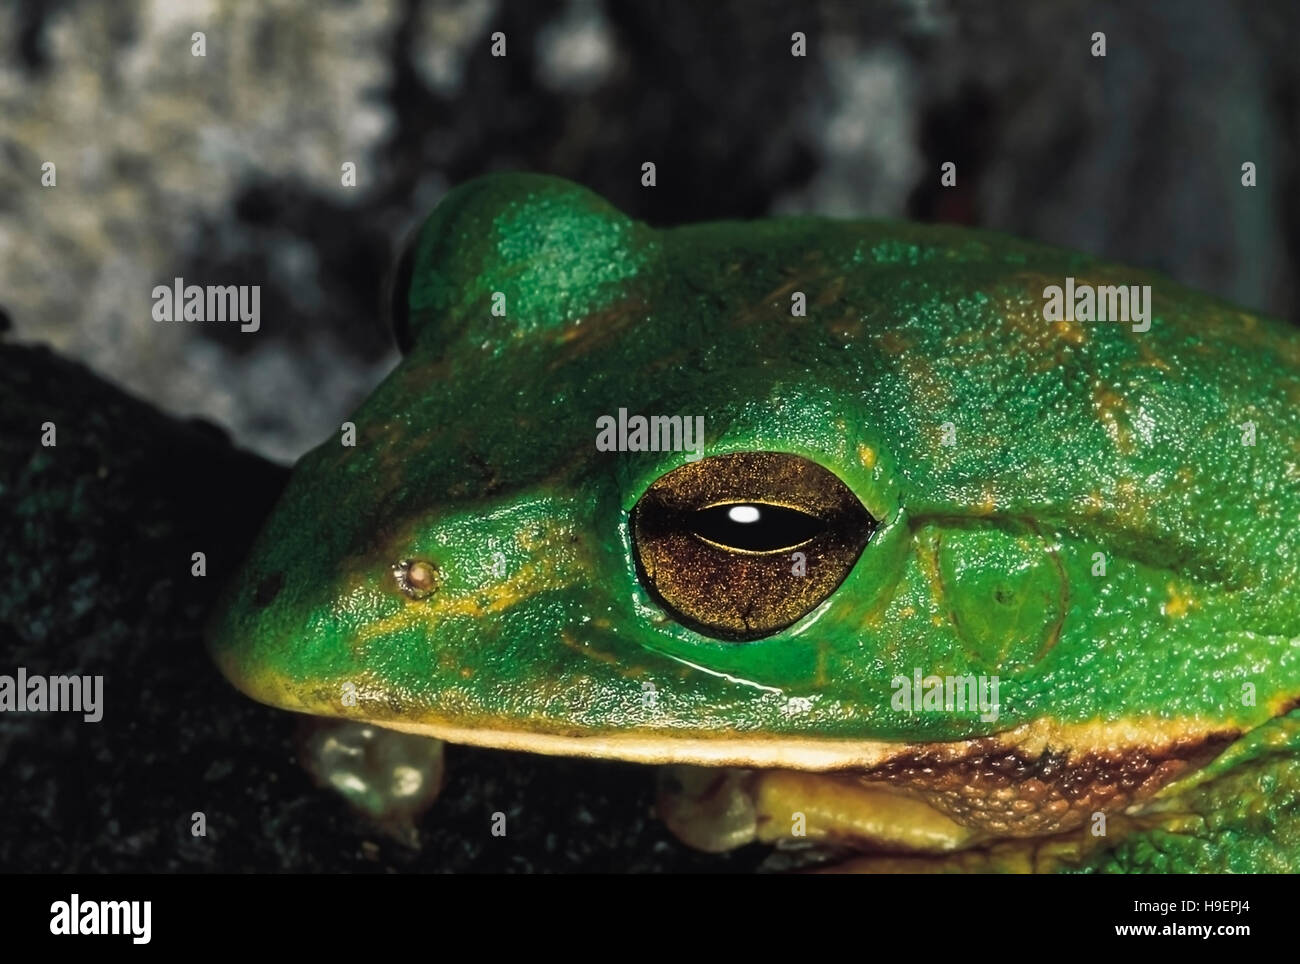 Rhacophorus malabaricus. Malabar gliding frog or Malabar flying frog. Close up of head. Arunachal Pradesh, India. Stock Photo